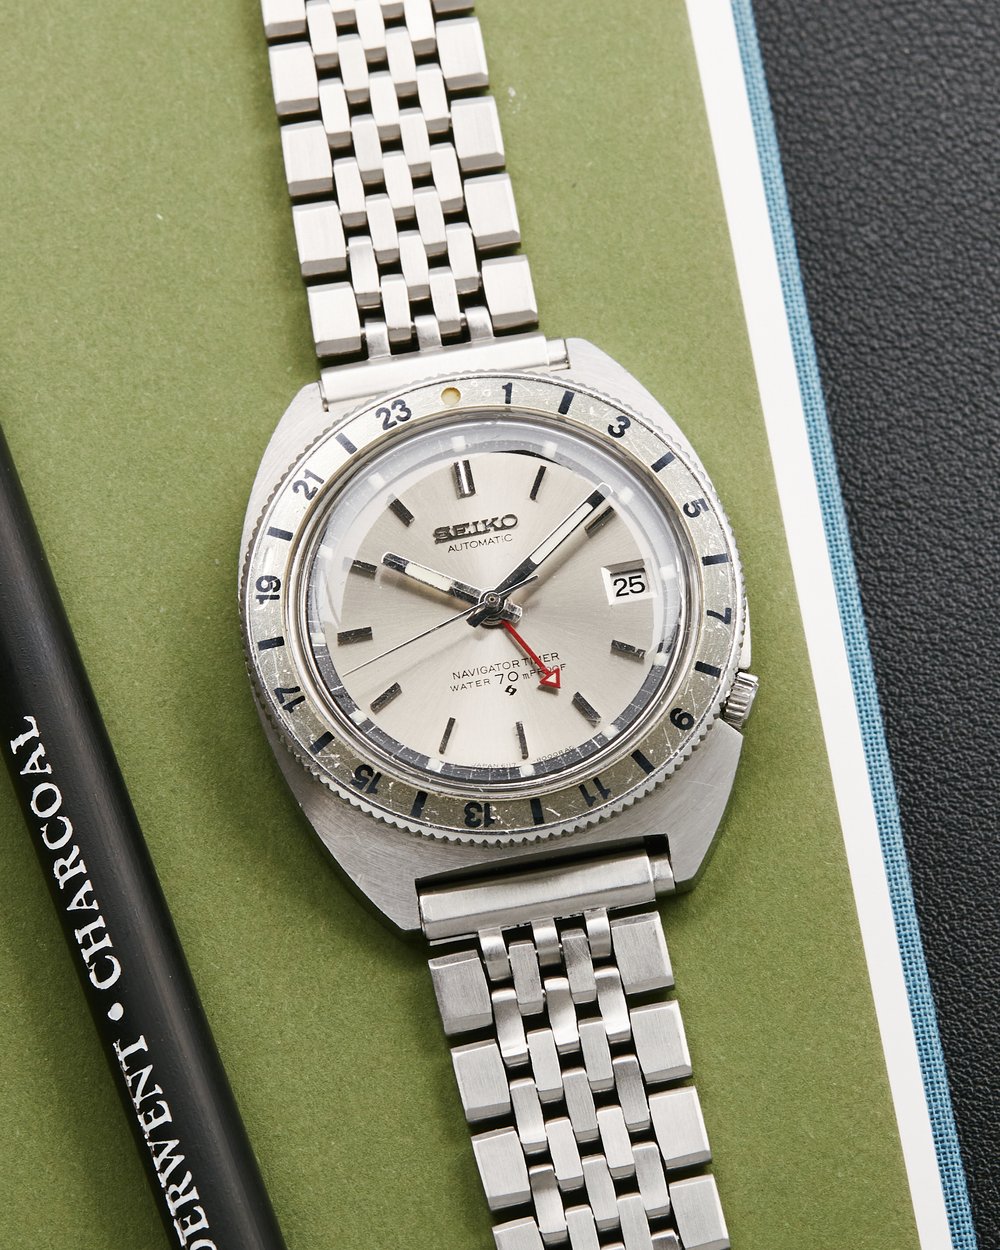 Seiko Navigator Timer GMT ref. 6117-8000 — Those Watch Guys